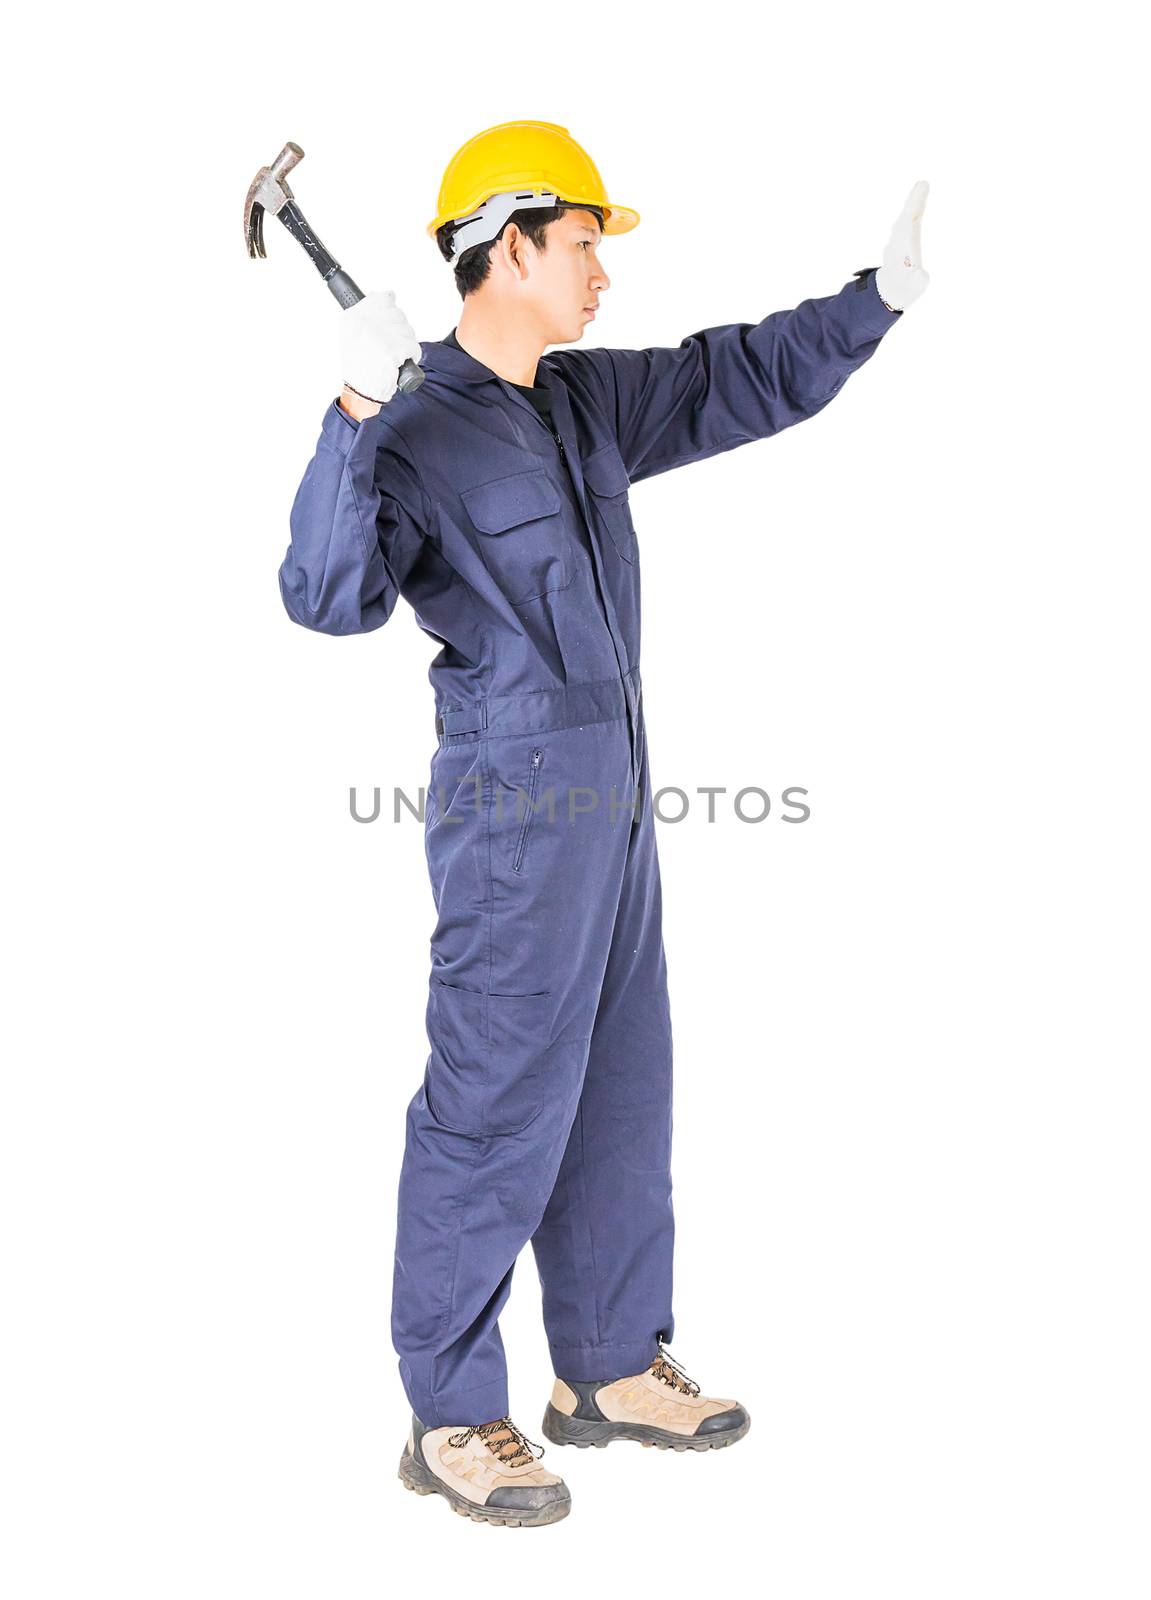 Handyman in uniform with his hammer by stoonn